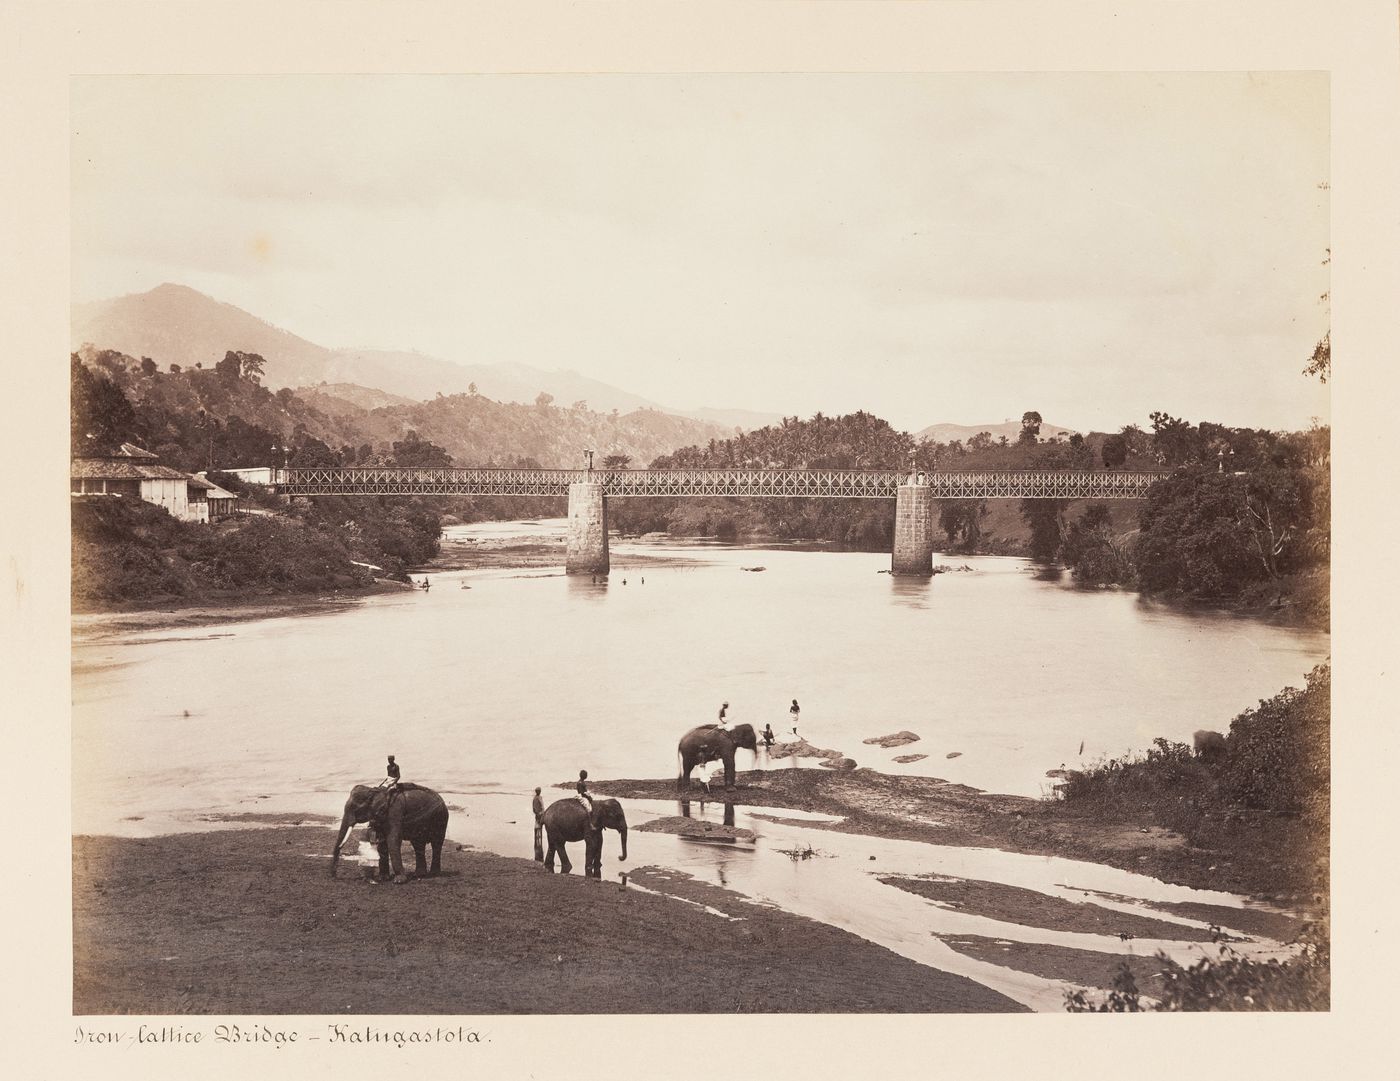 View of the Kutagastota Bridge over the Mahaweli Ganga with elephants and people in the foreground, Kutagastota, Ceylon (now Sri Lanka)